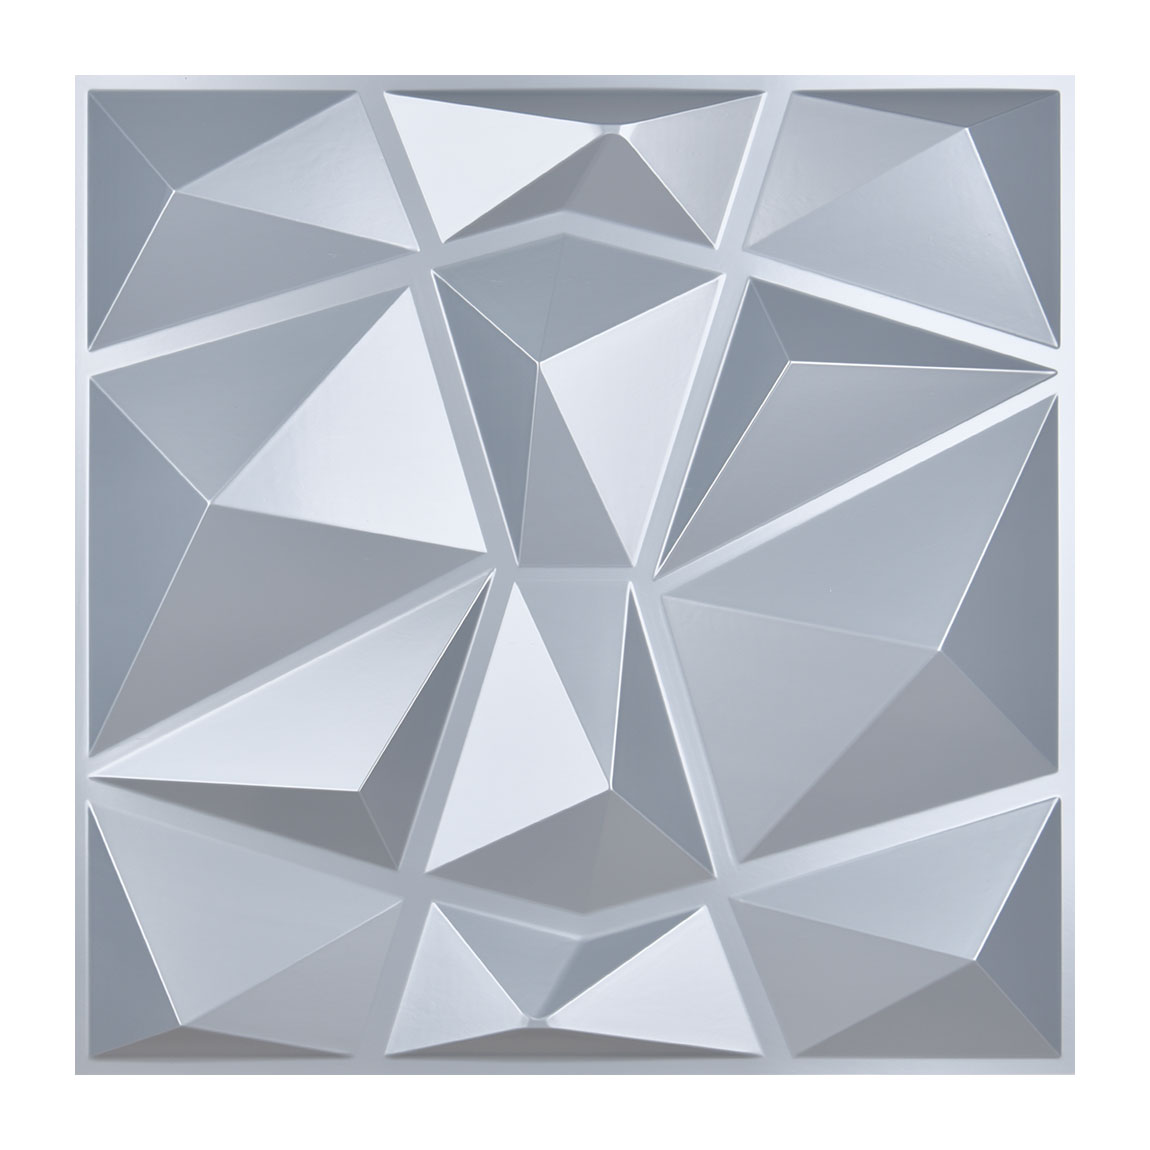 A10038 - Textures 3D Wall Panels White Diamond Wall Design, 12 Tiles 32 SF